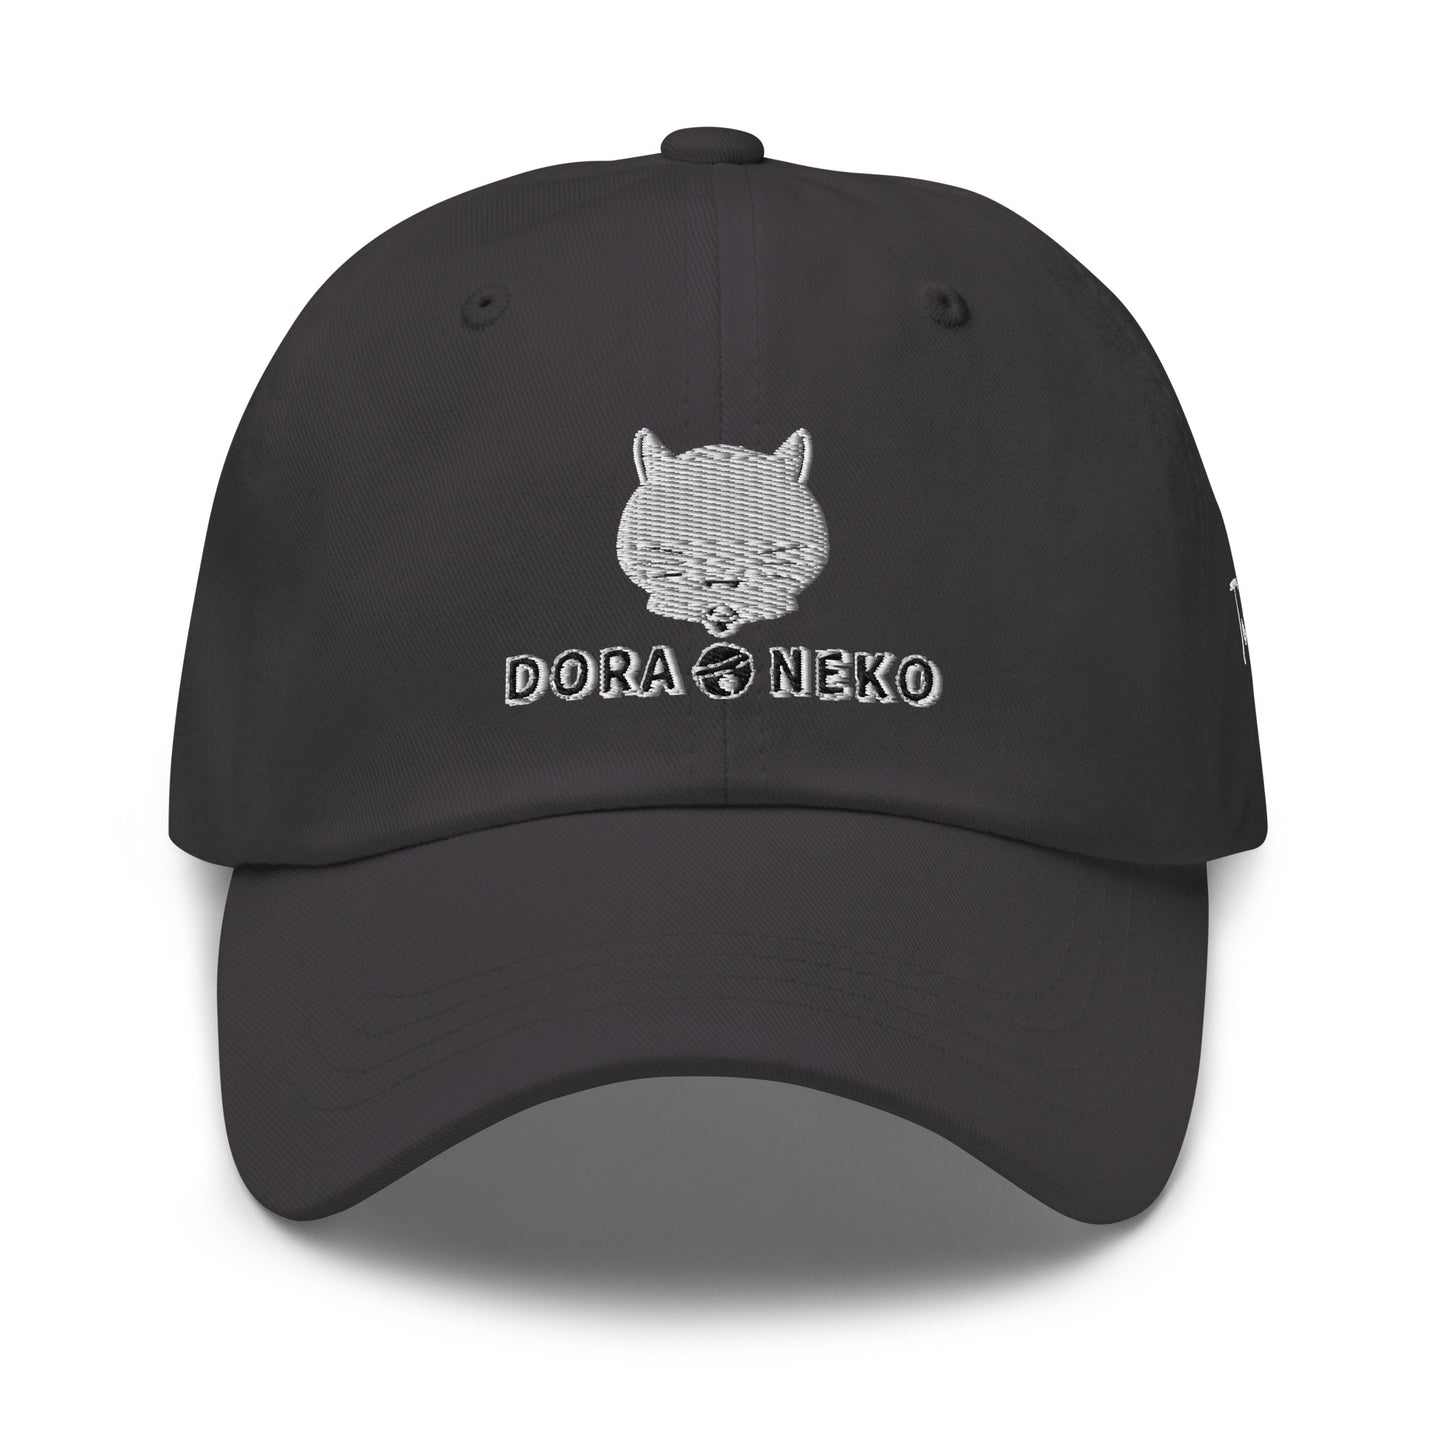 XCROSS DASH×TOMATO KETCHUP DORANEKO ORIGINAL DESIGN  | Classic Dad hat  | 刺繍ロゴ 6colors